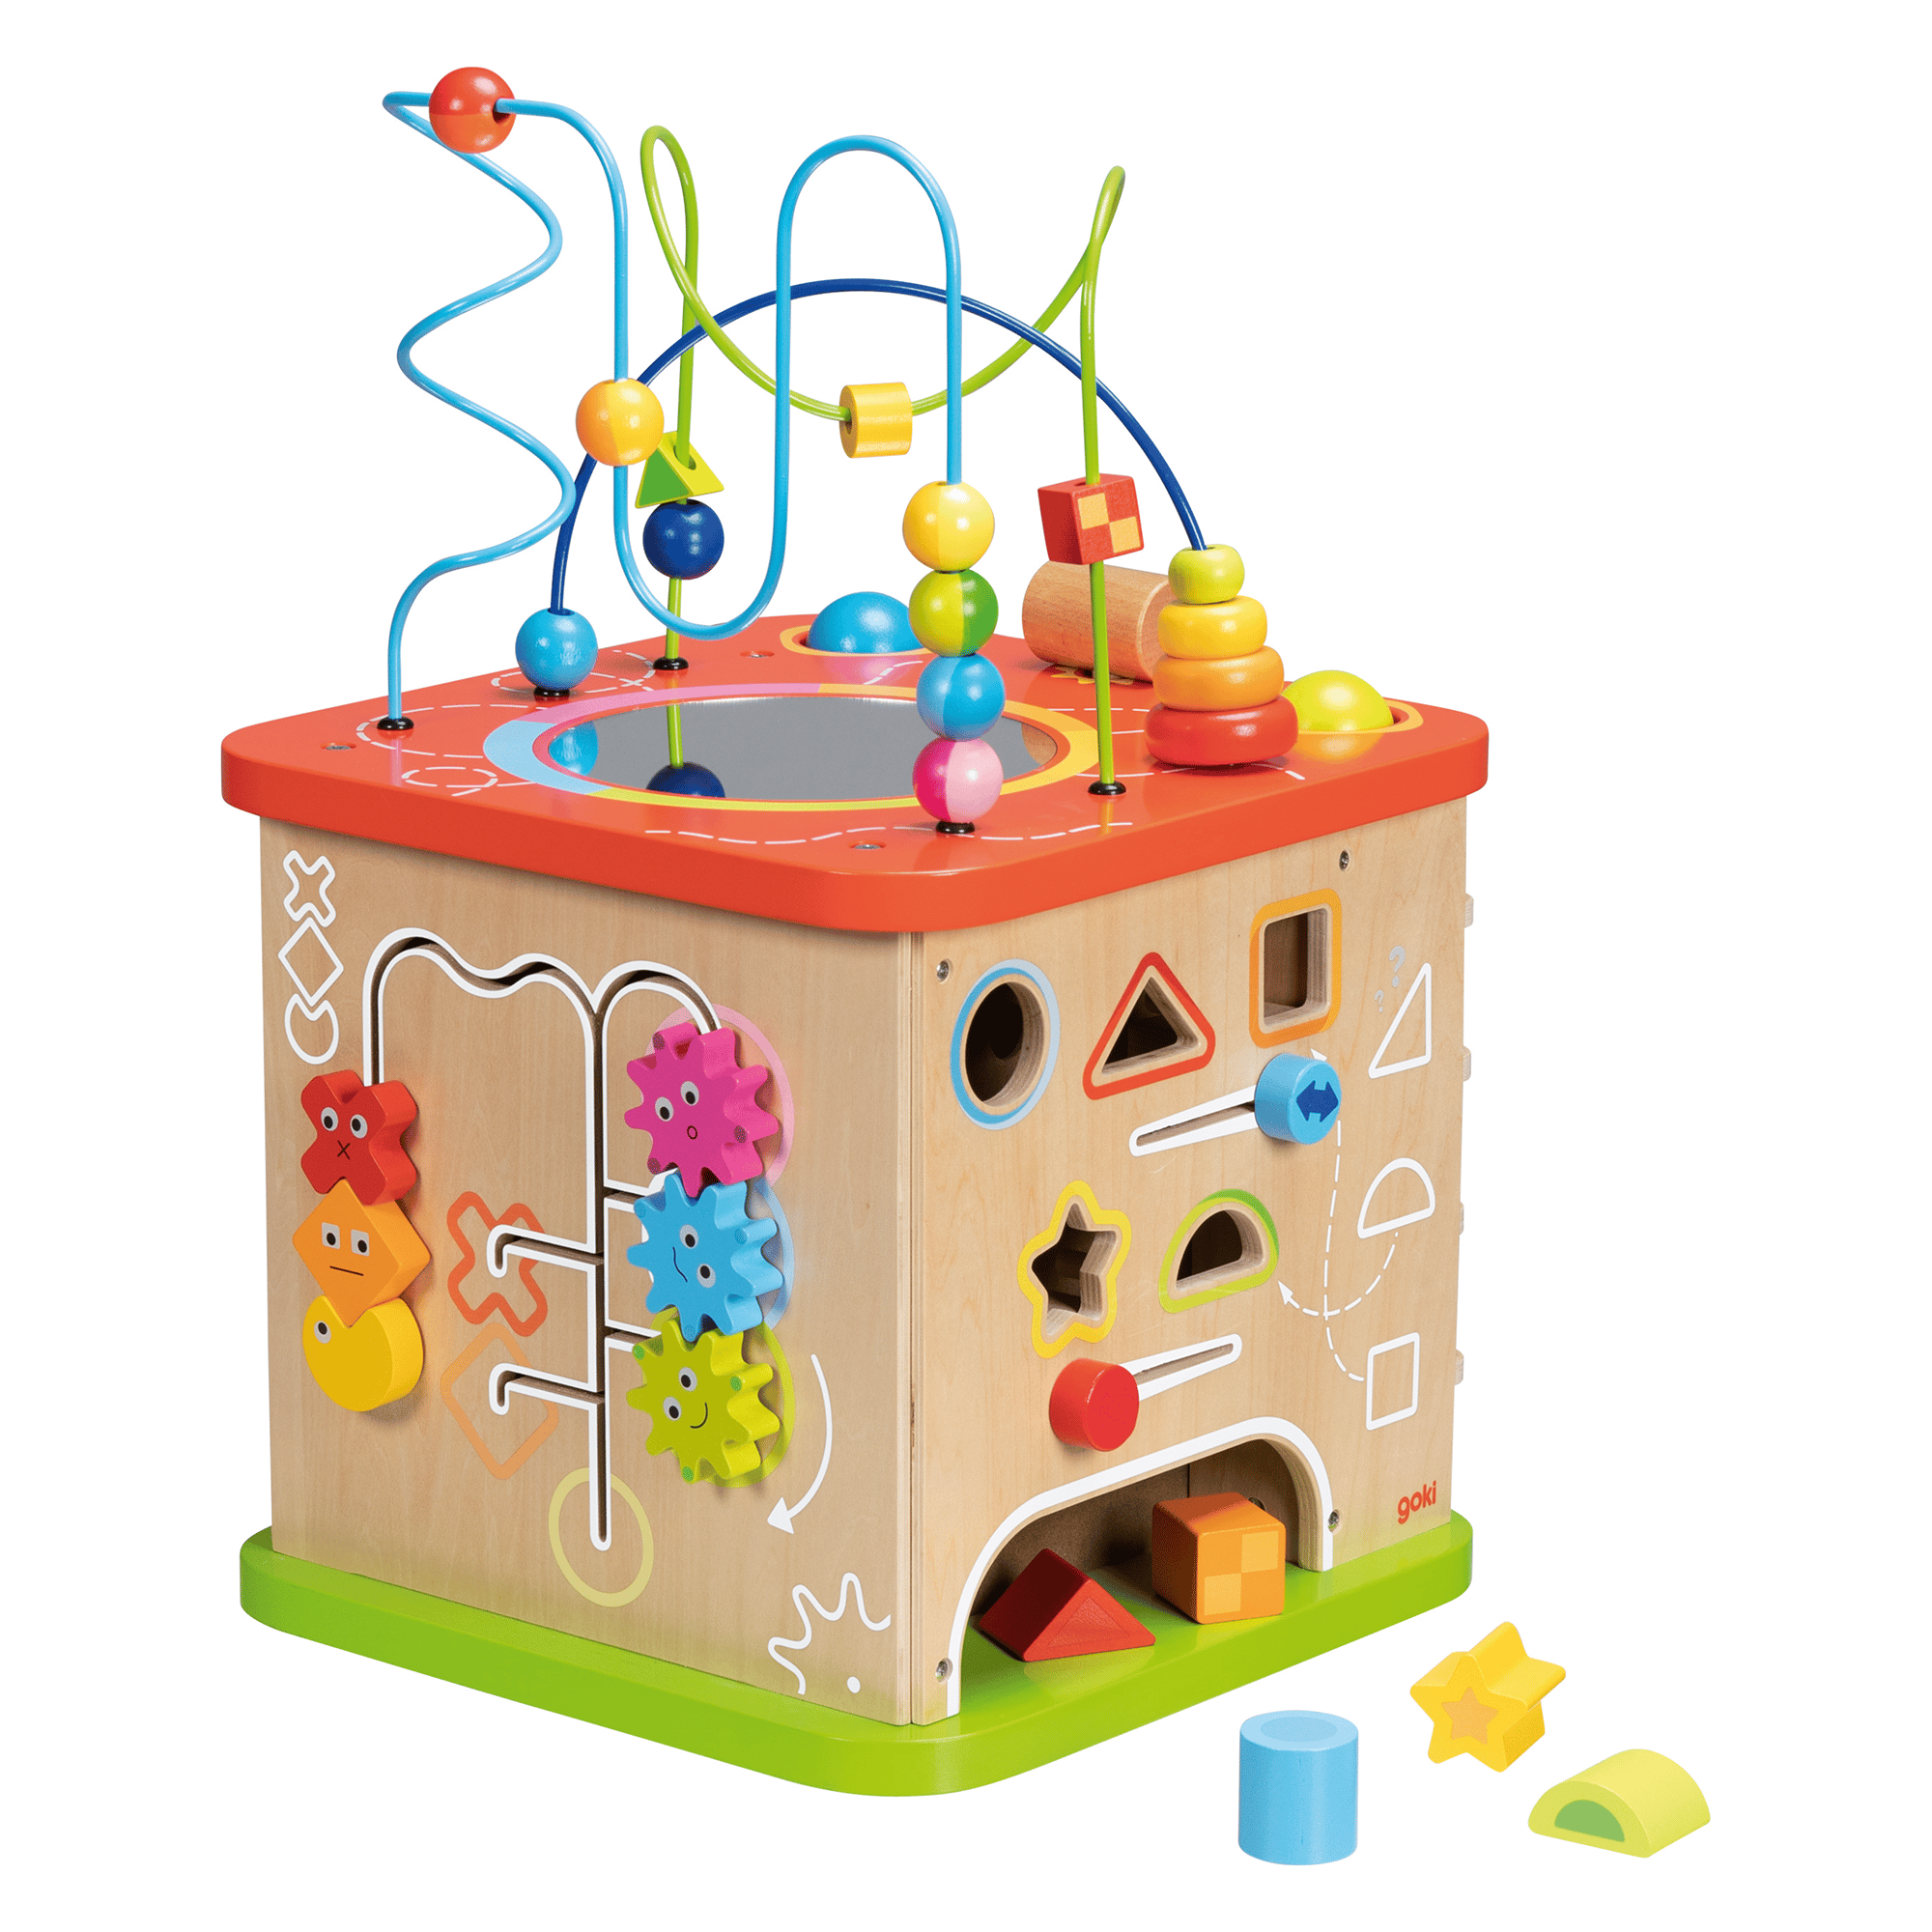 Goki: Active Kids educational cube